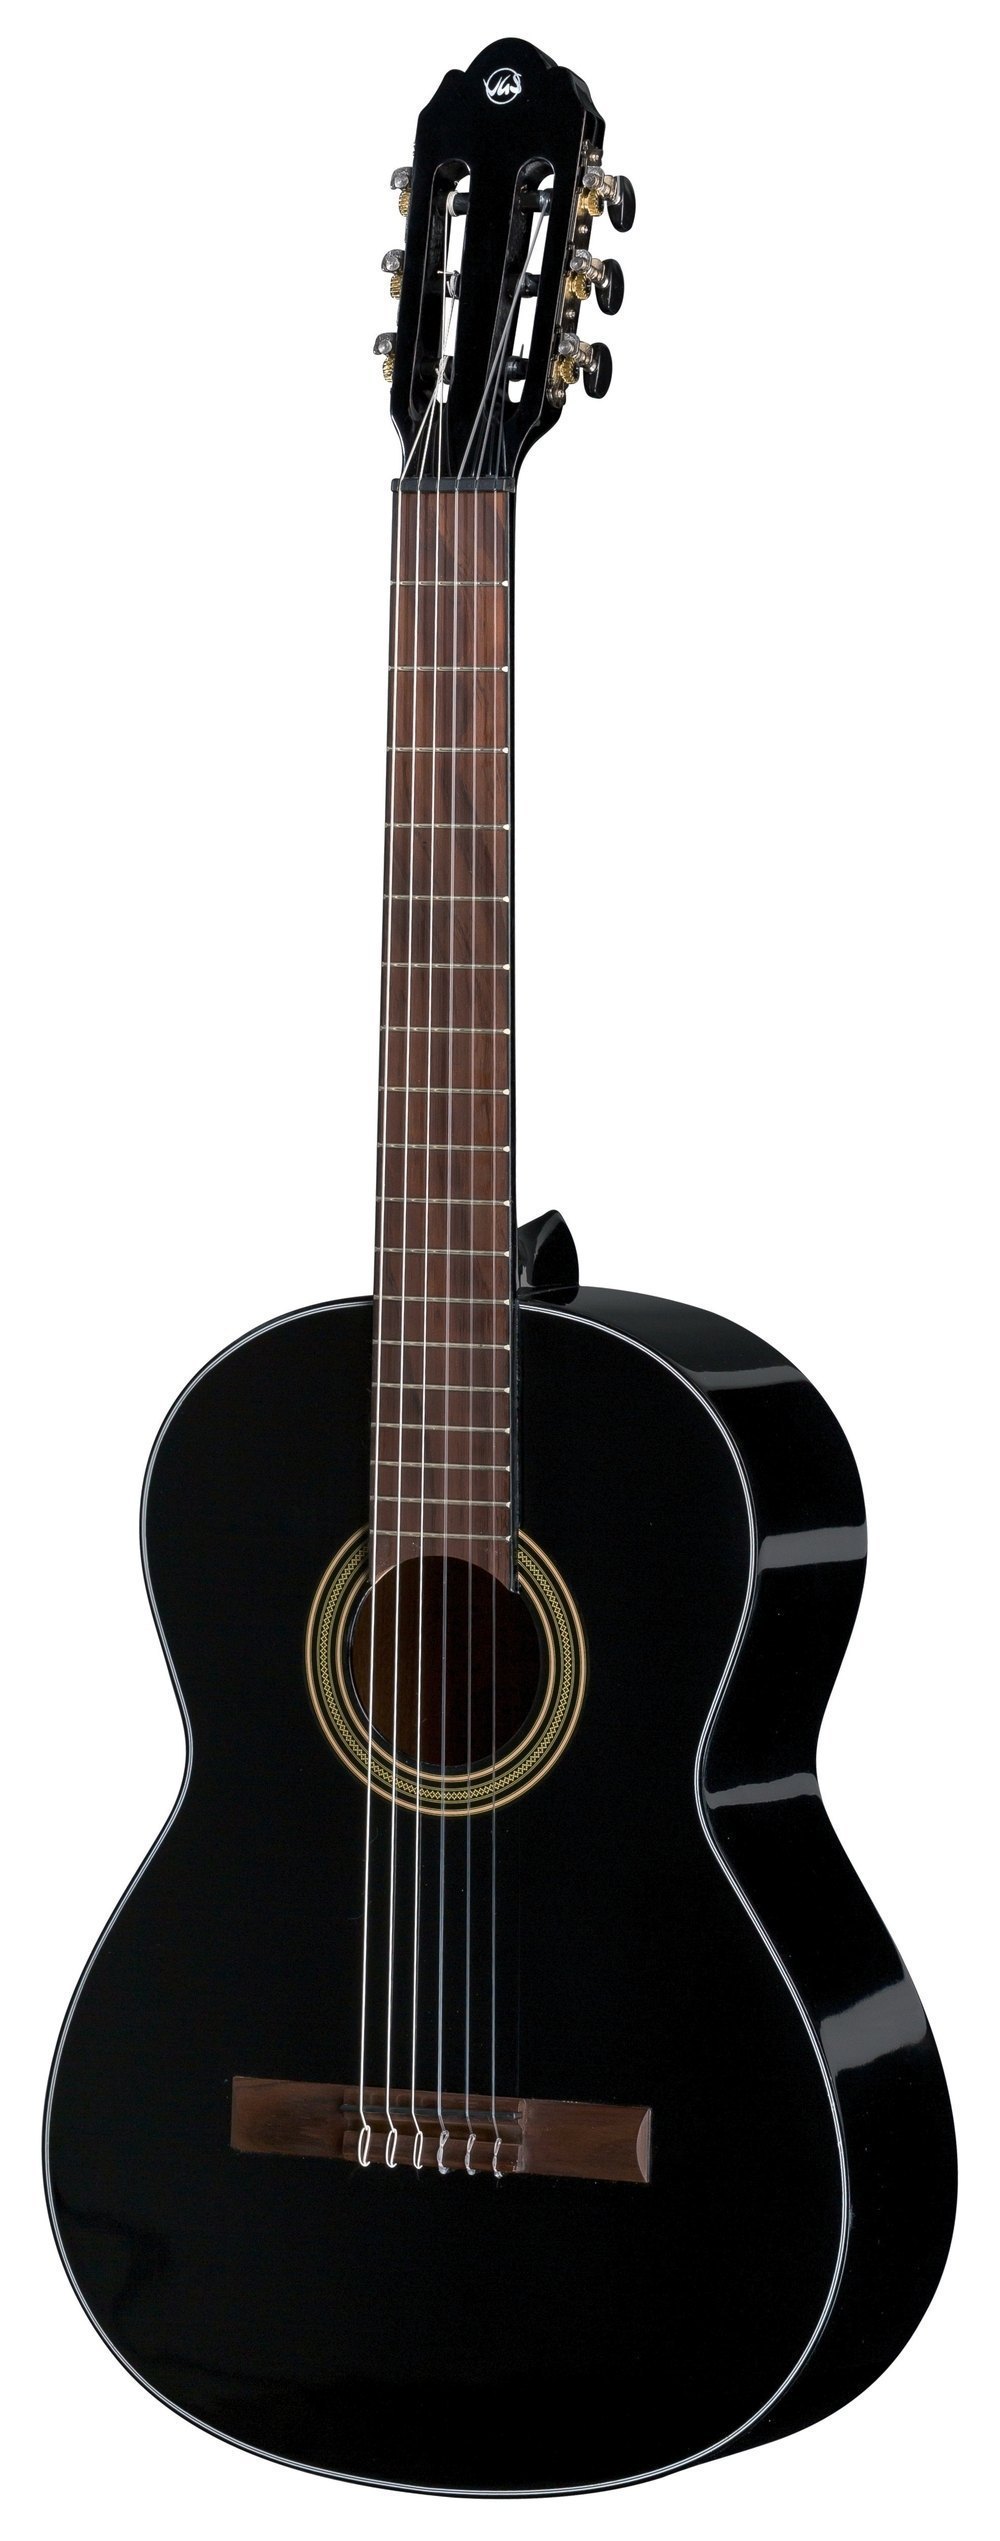 GEWA Classical Guitar Student black 4/4 size black